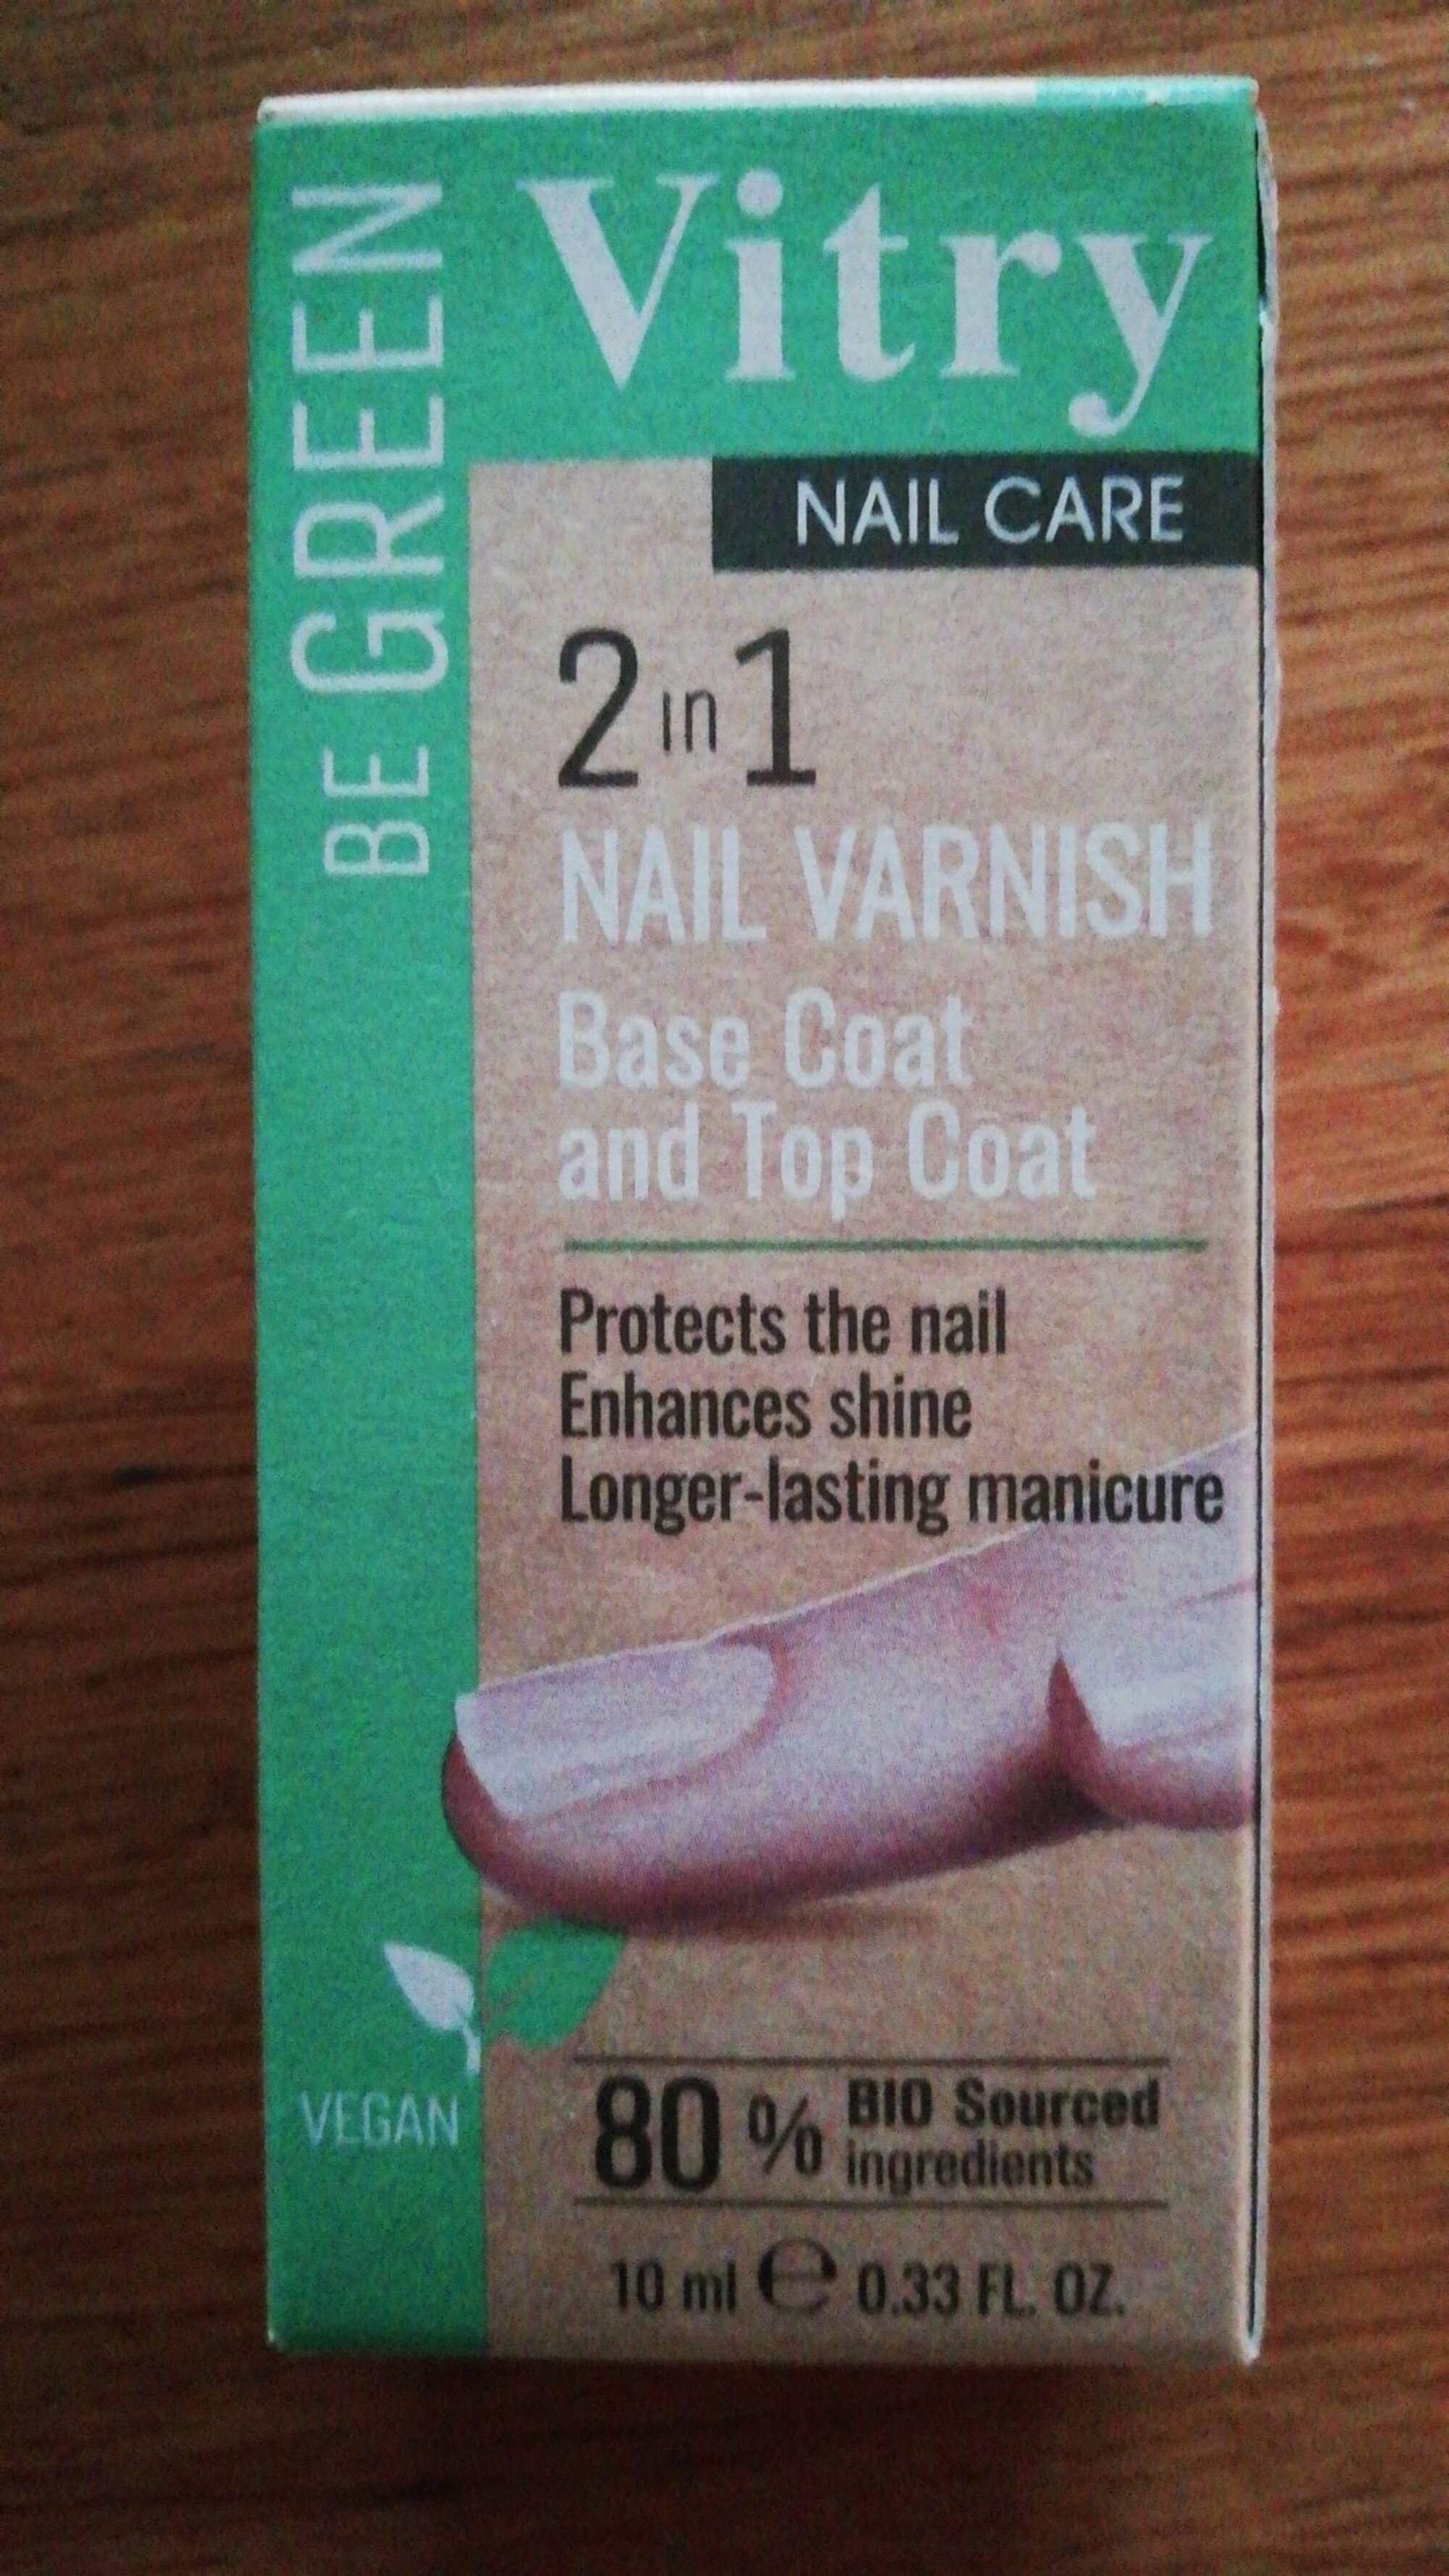 VITRY - 2 in 1 nail varnish base coat and top coat